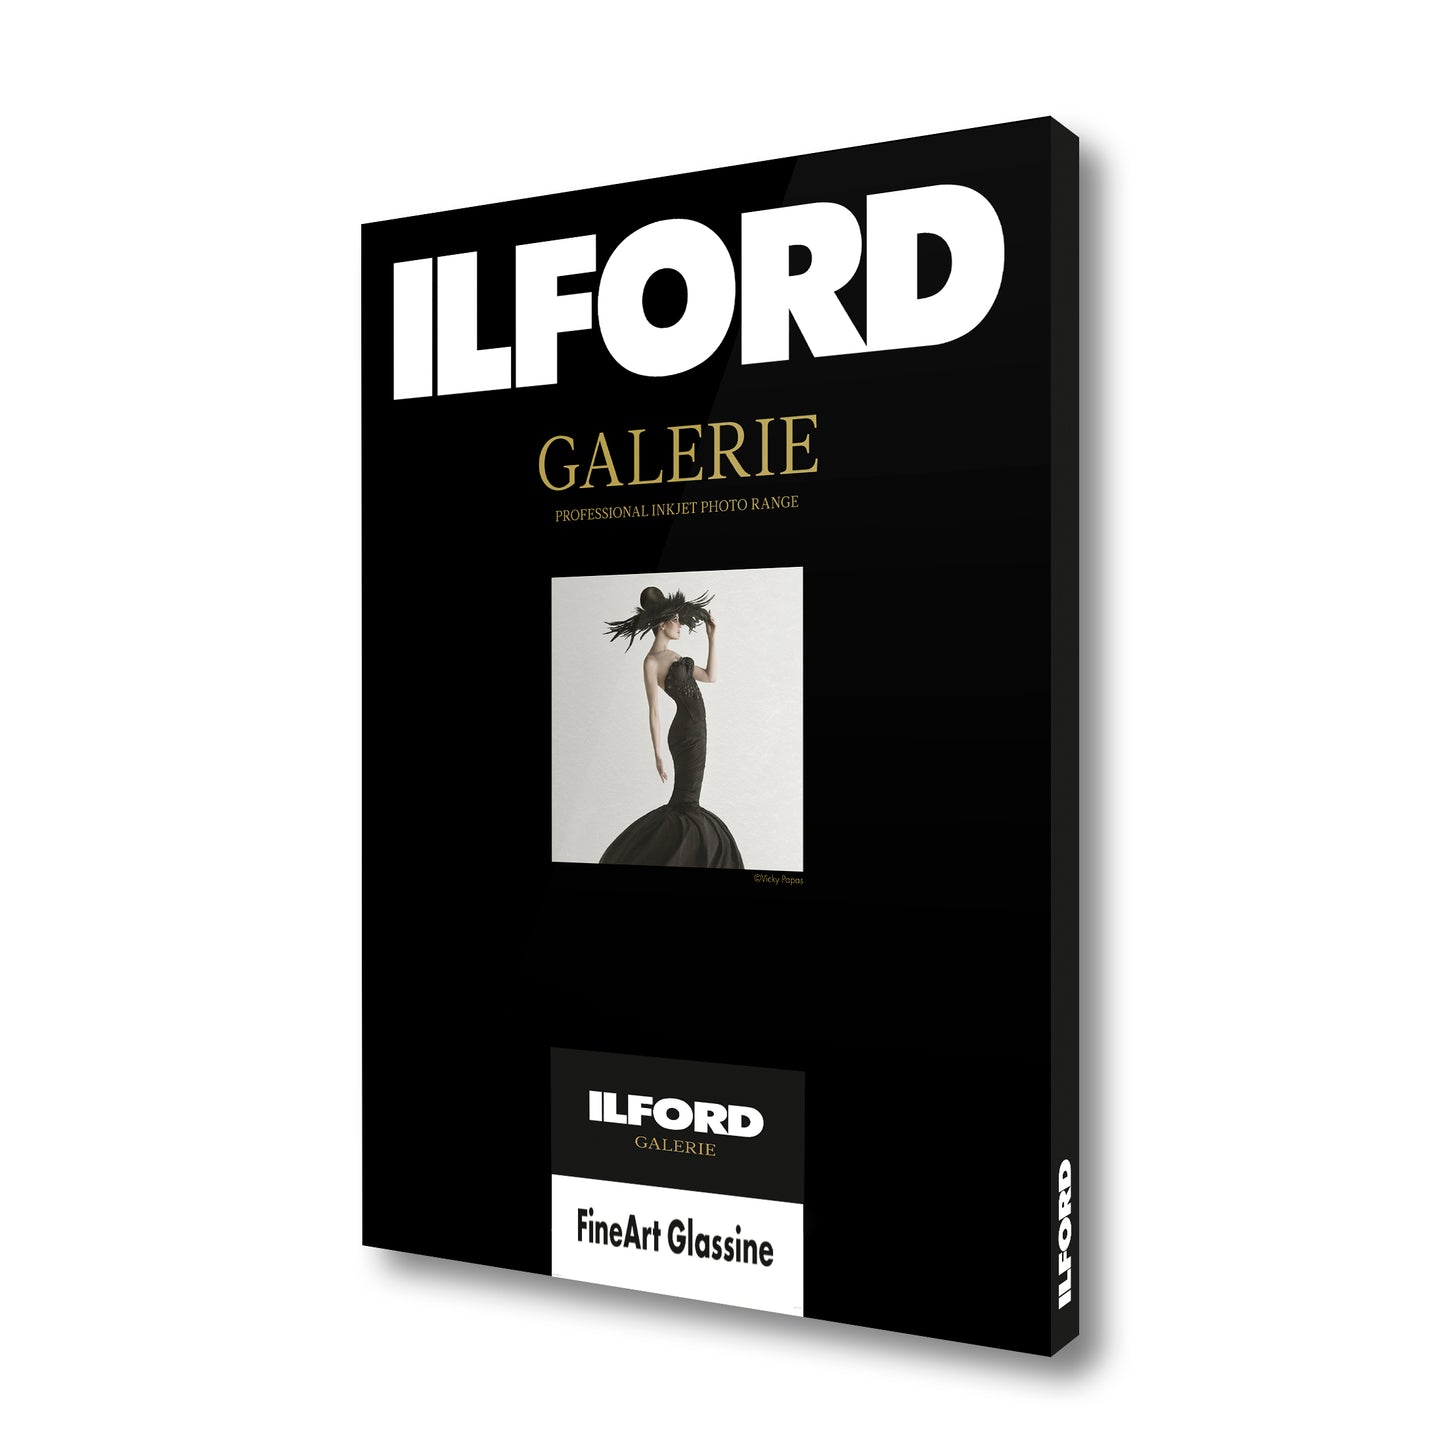 ILFORD GALERIE FineArt Glassine (GFAG)